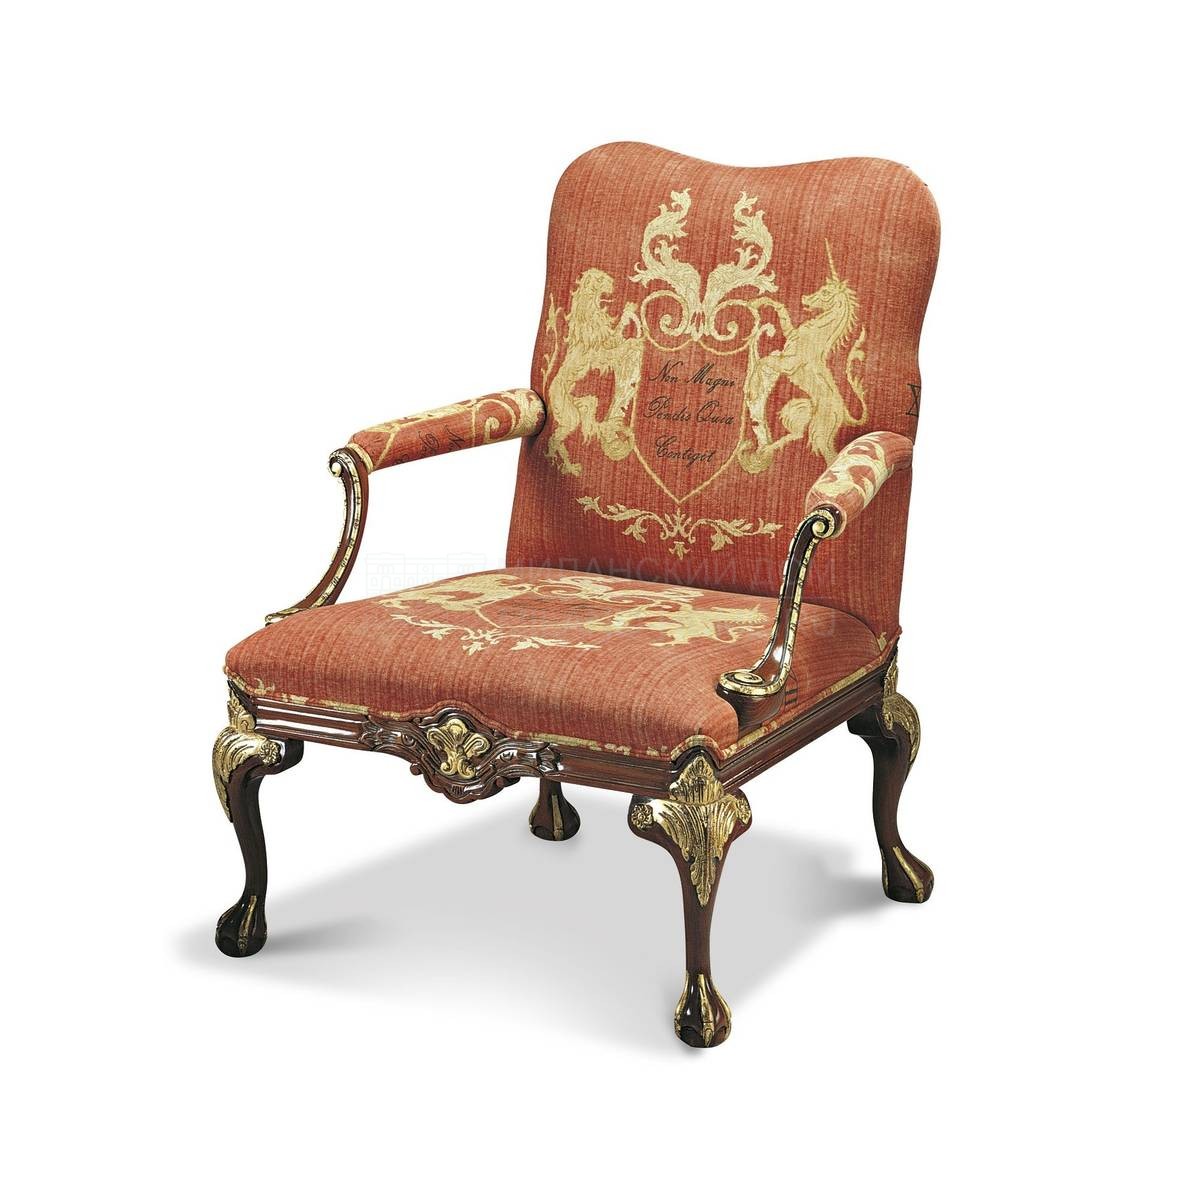 Кресло The Upholstery/P270 из Италии фабрики FRANCESCO MOLON